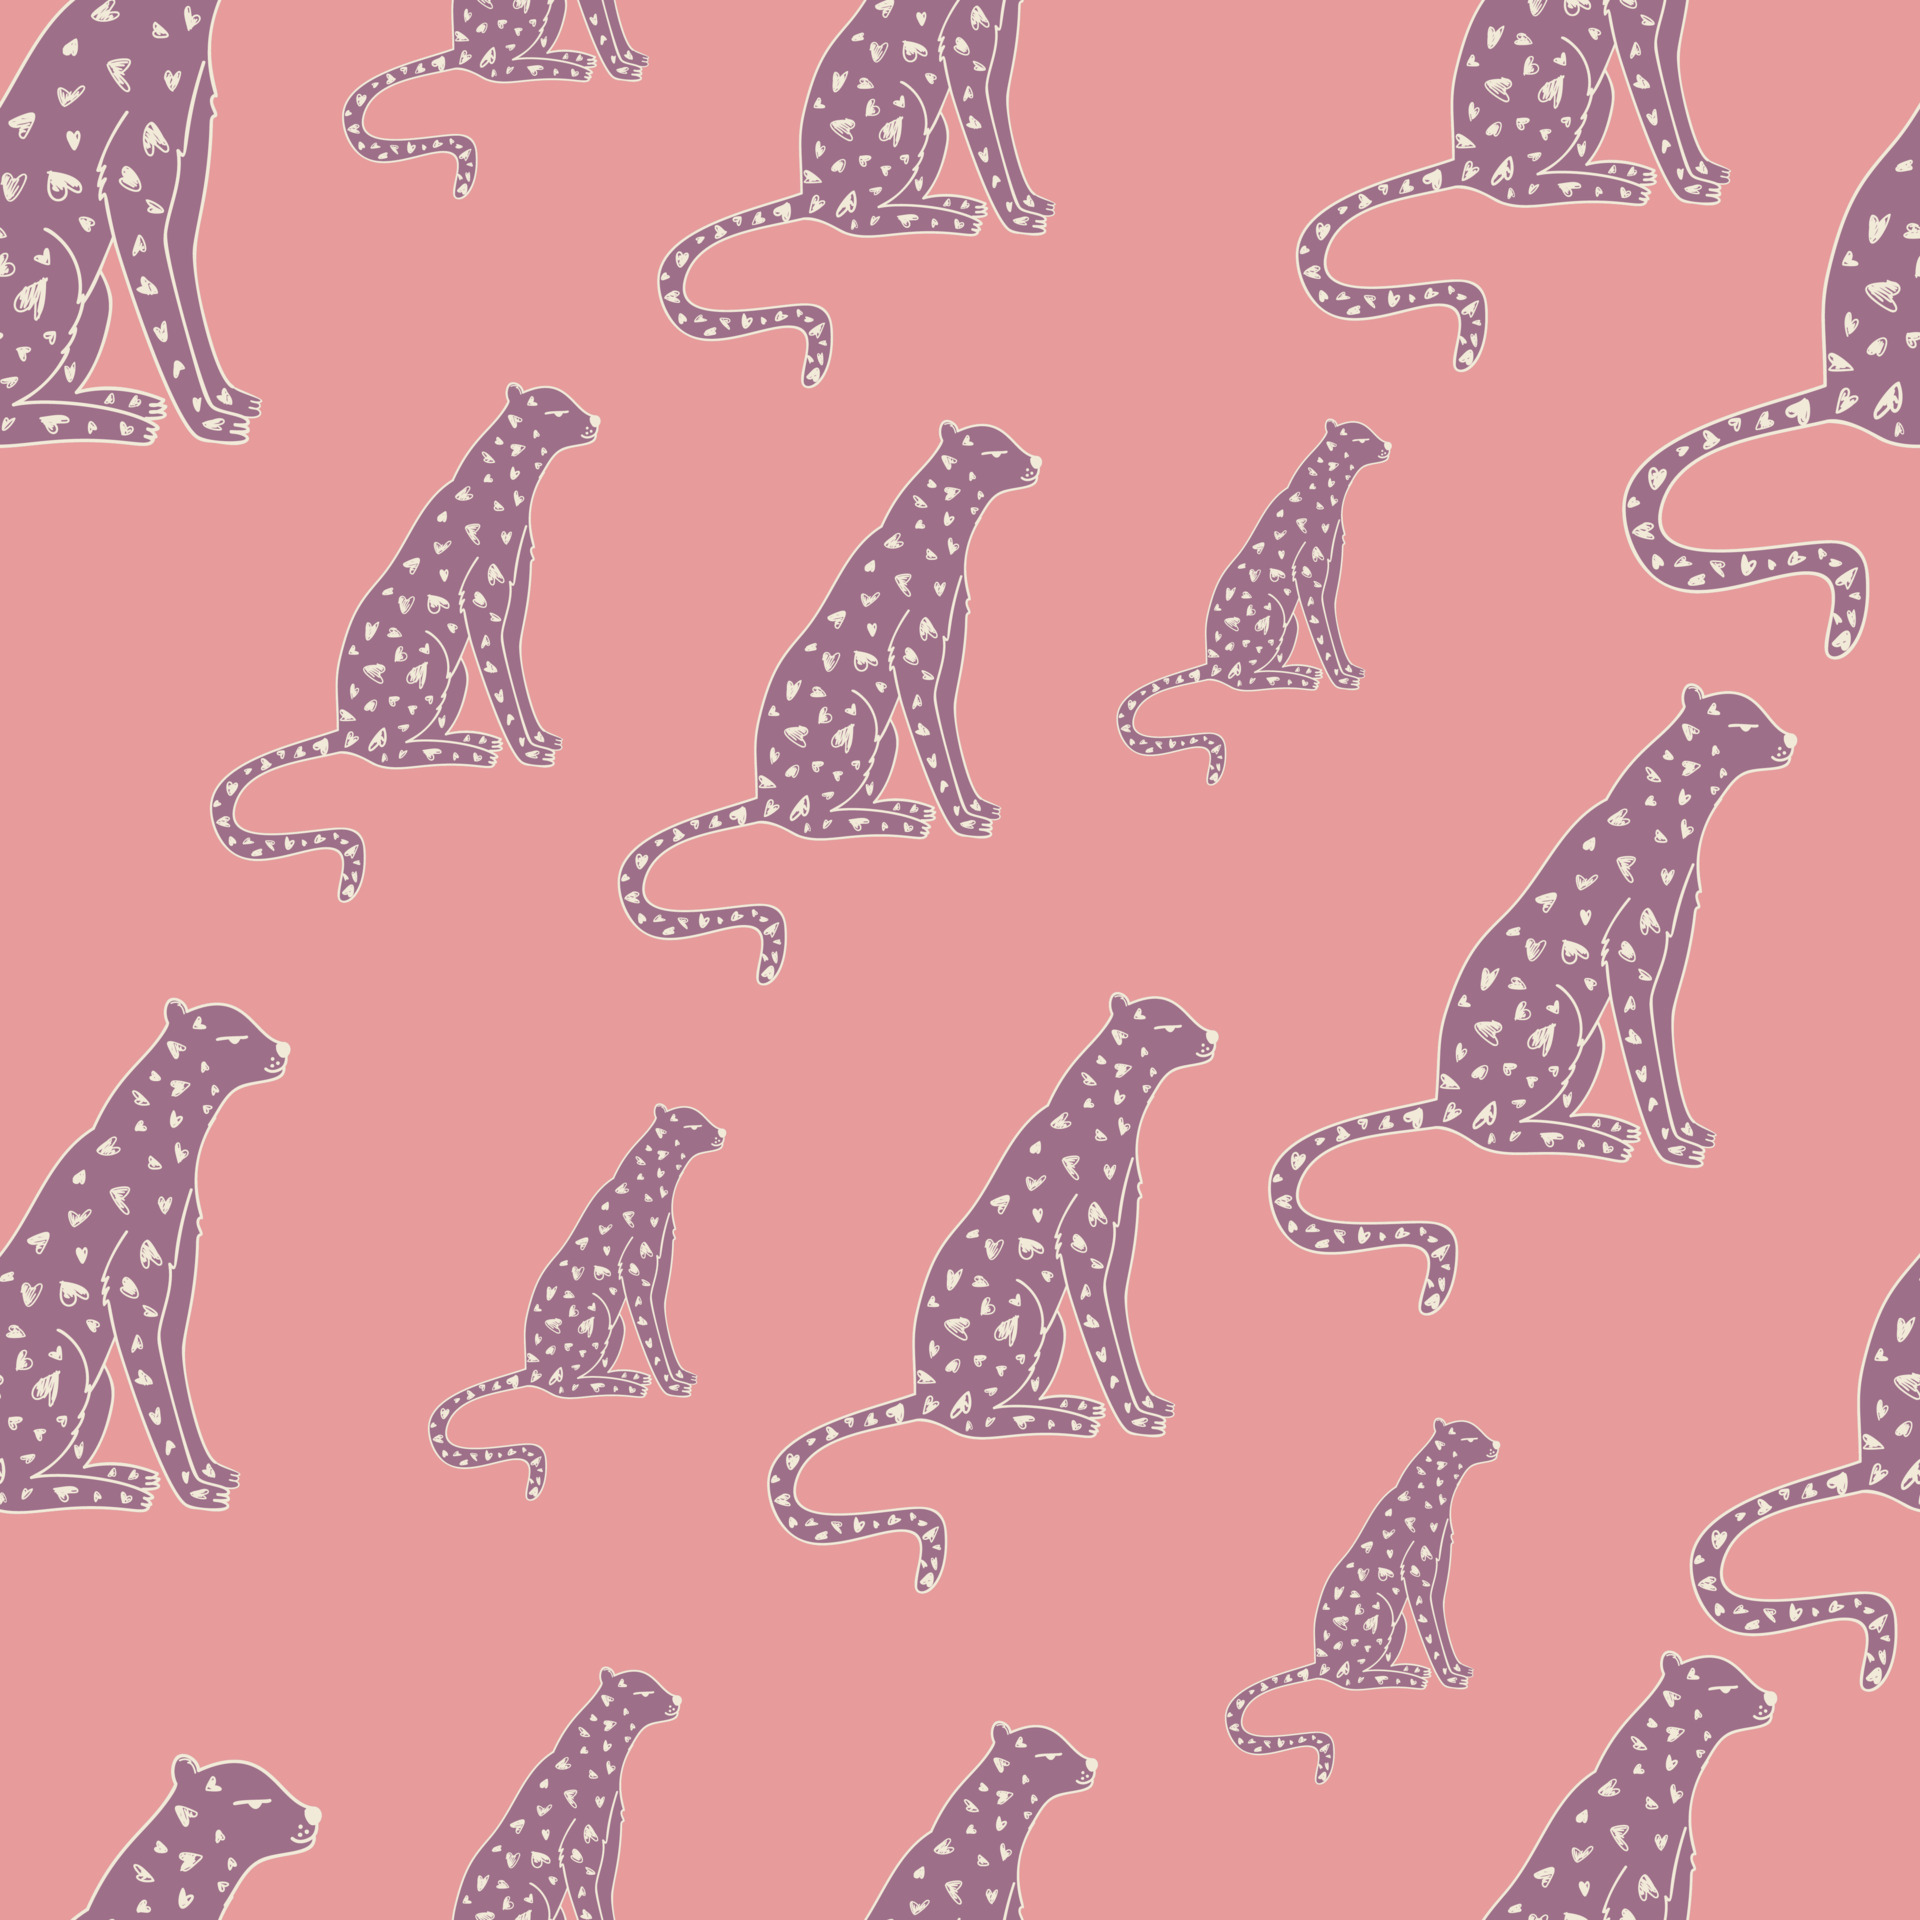 Premium Vector  Doodle cheetah seamless pattern hand drawn cute leopard  endless wallpaper wild animals background